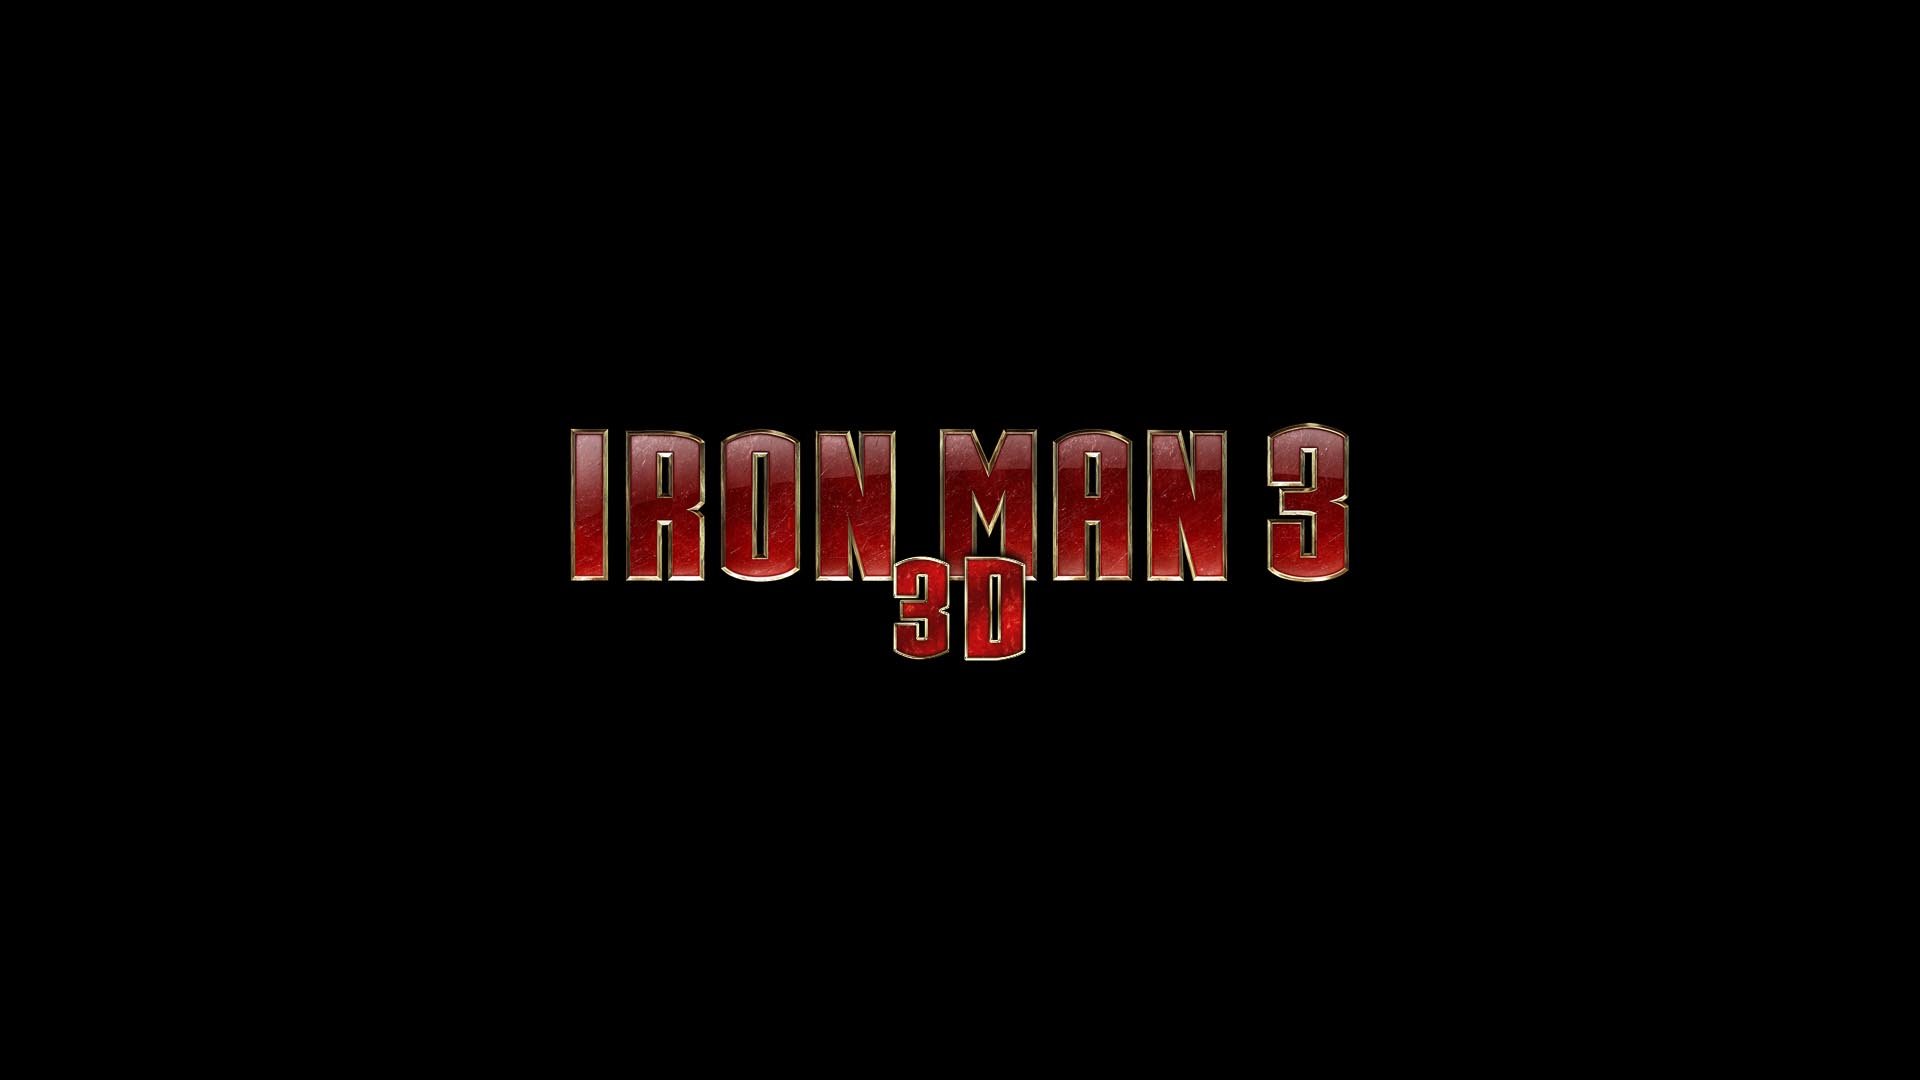 Free download Iron Man 3 wallpaper ID:400925 1080p for desktop